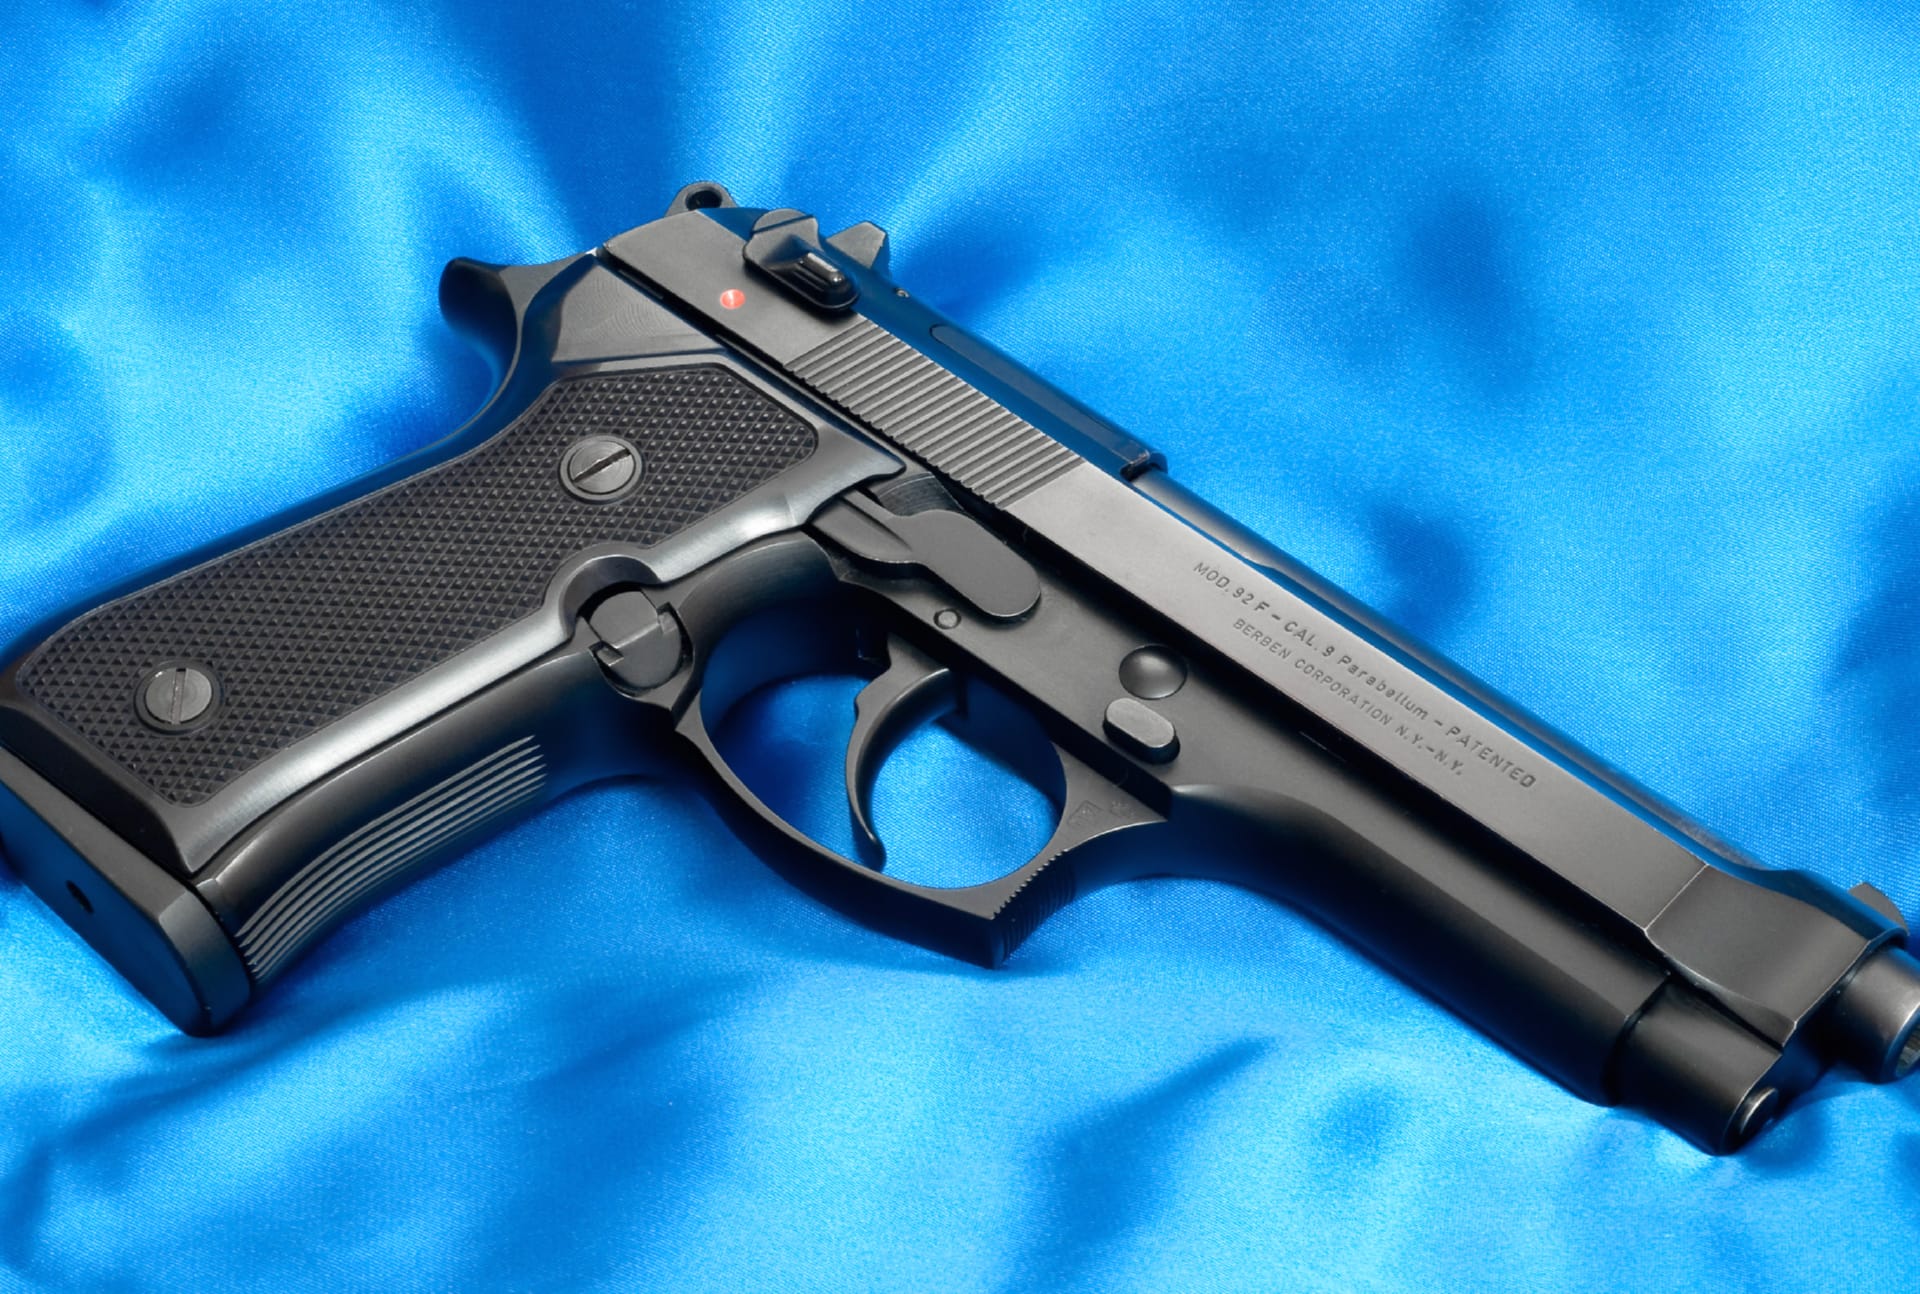 Beretta 92F Pistol at 640 x 1136 iPhone 5 size wallpapers HD quality